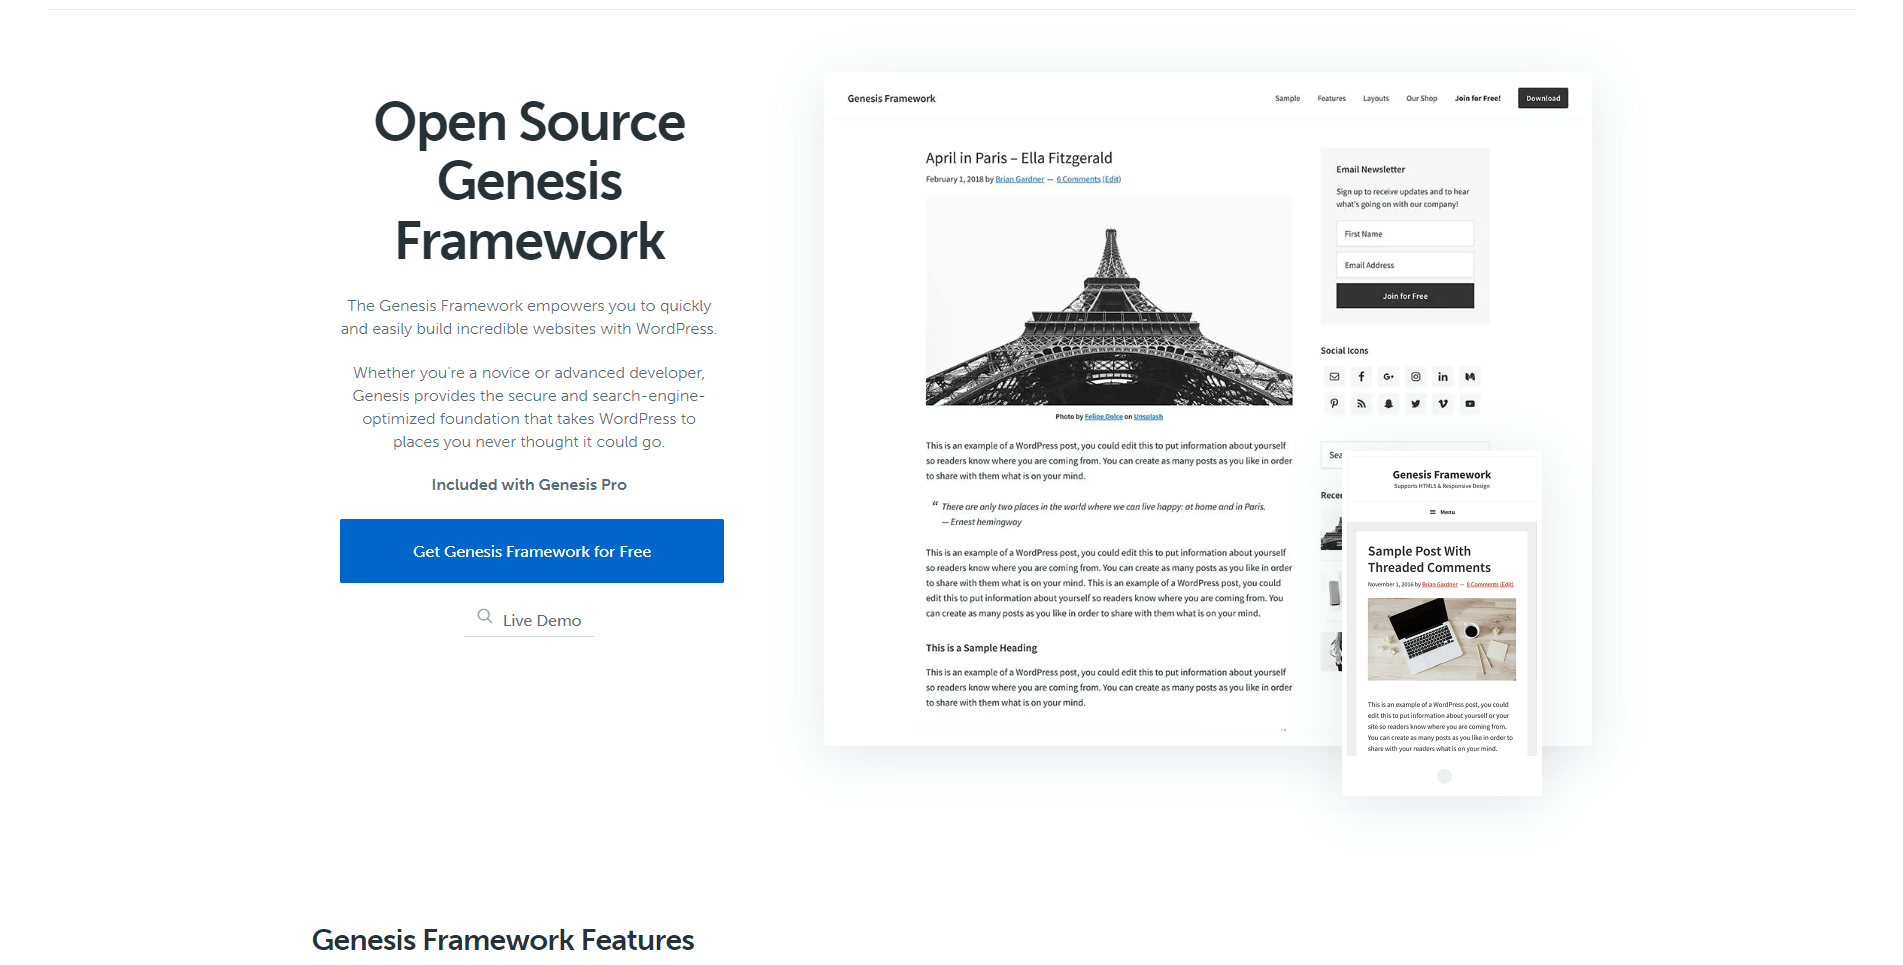 Open Source Genesis Framework